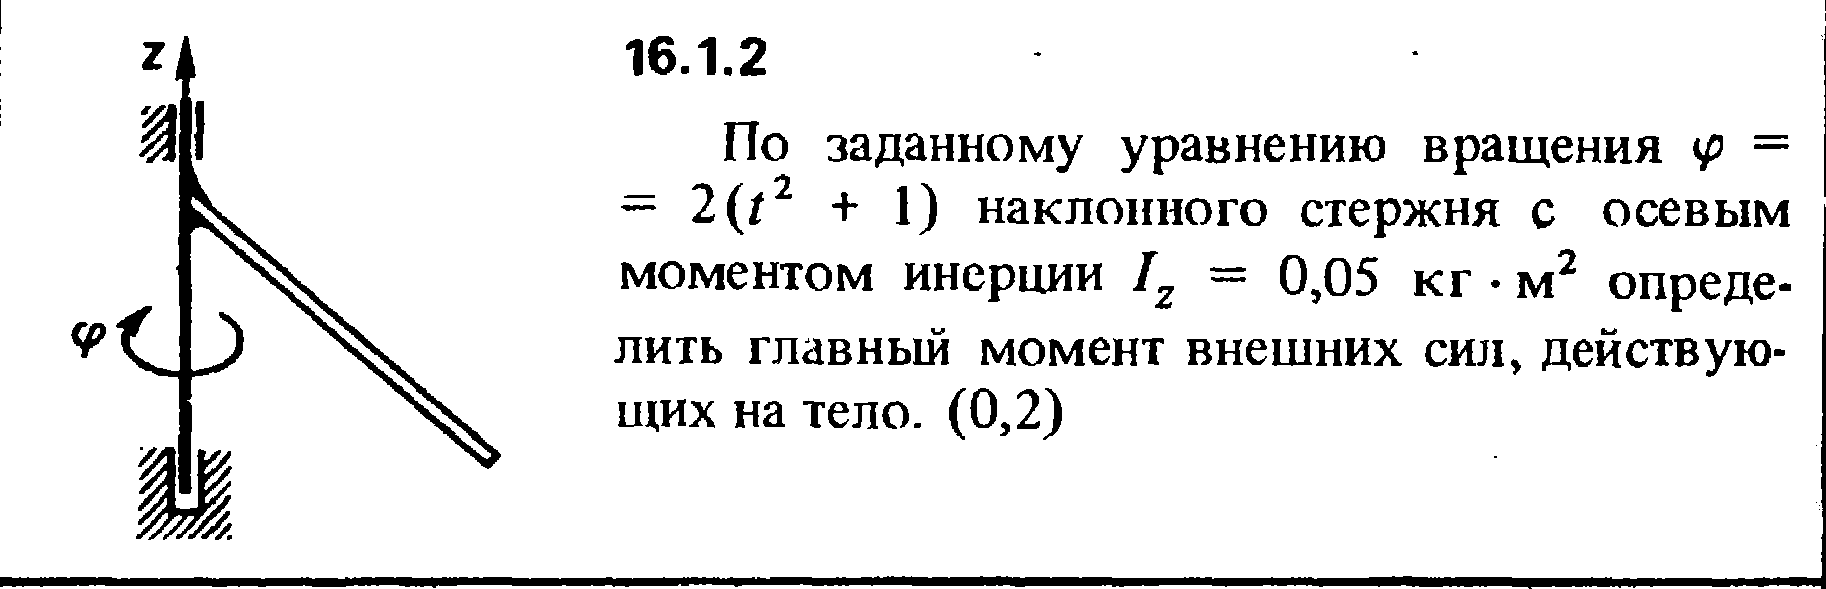 Решение задачи 16.1.2 из сборника Кепе О.Е. 1989 года